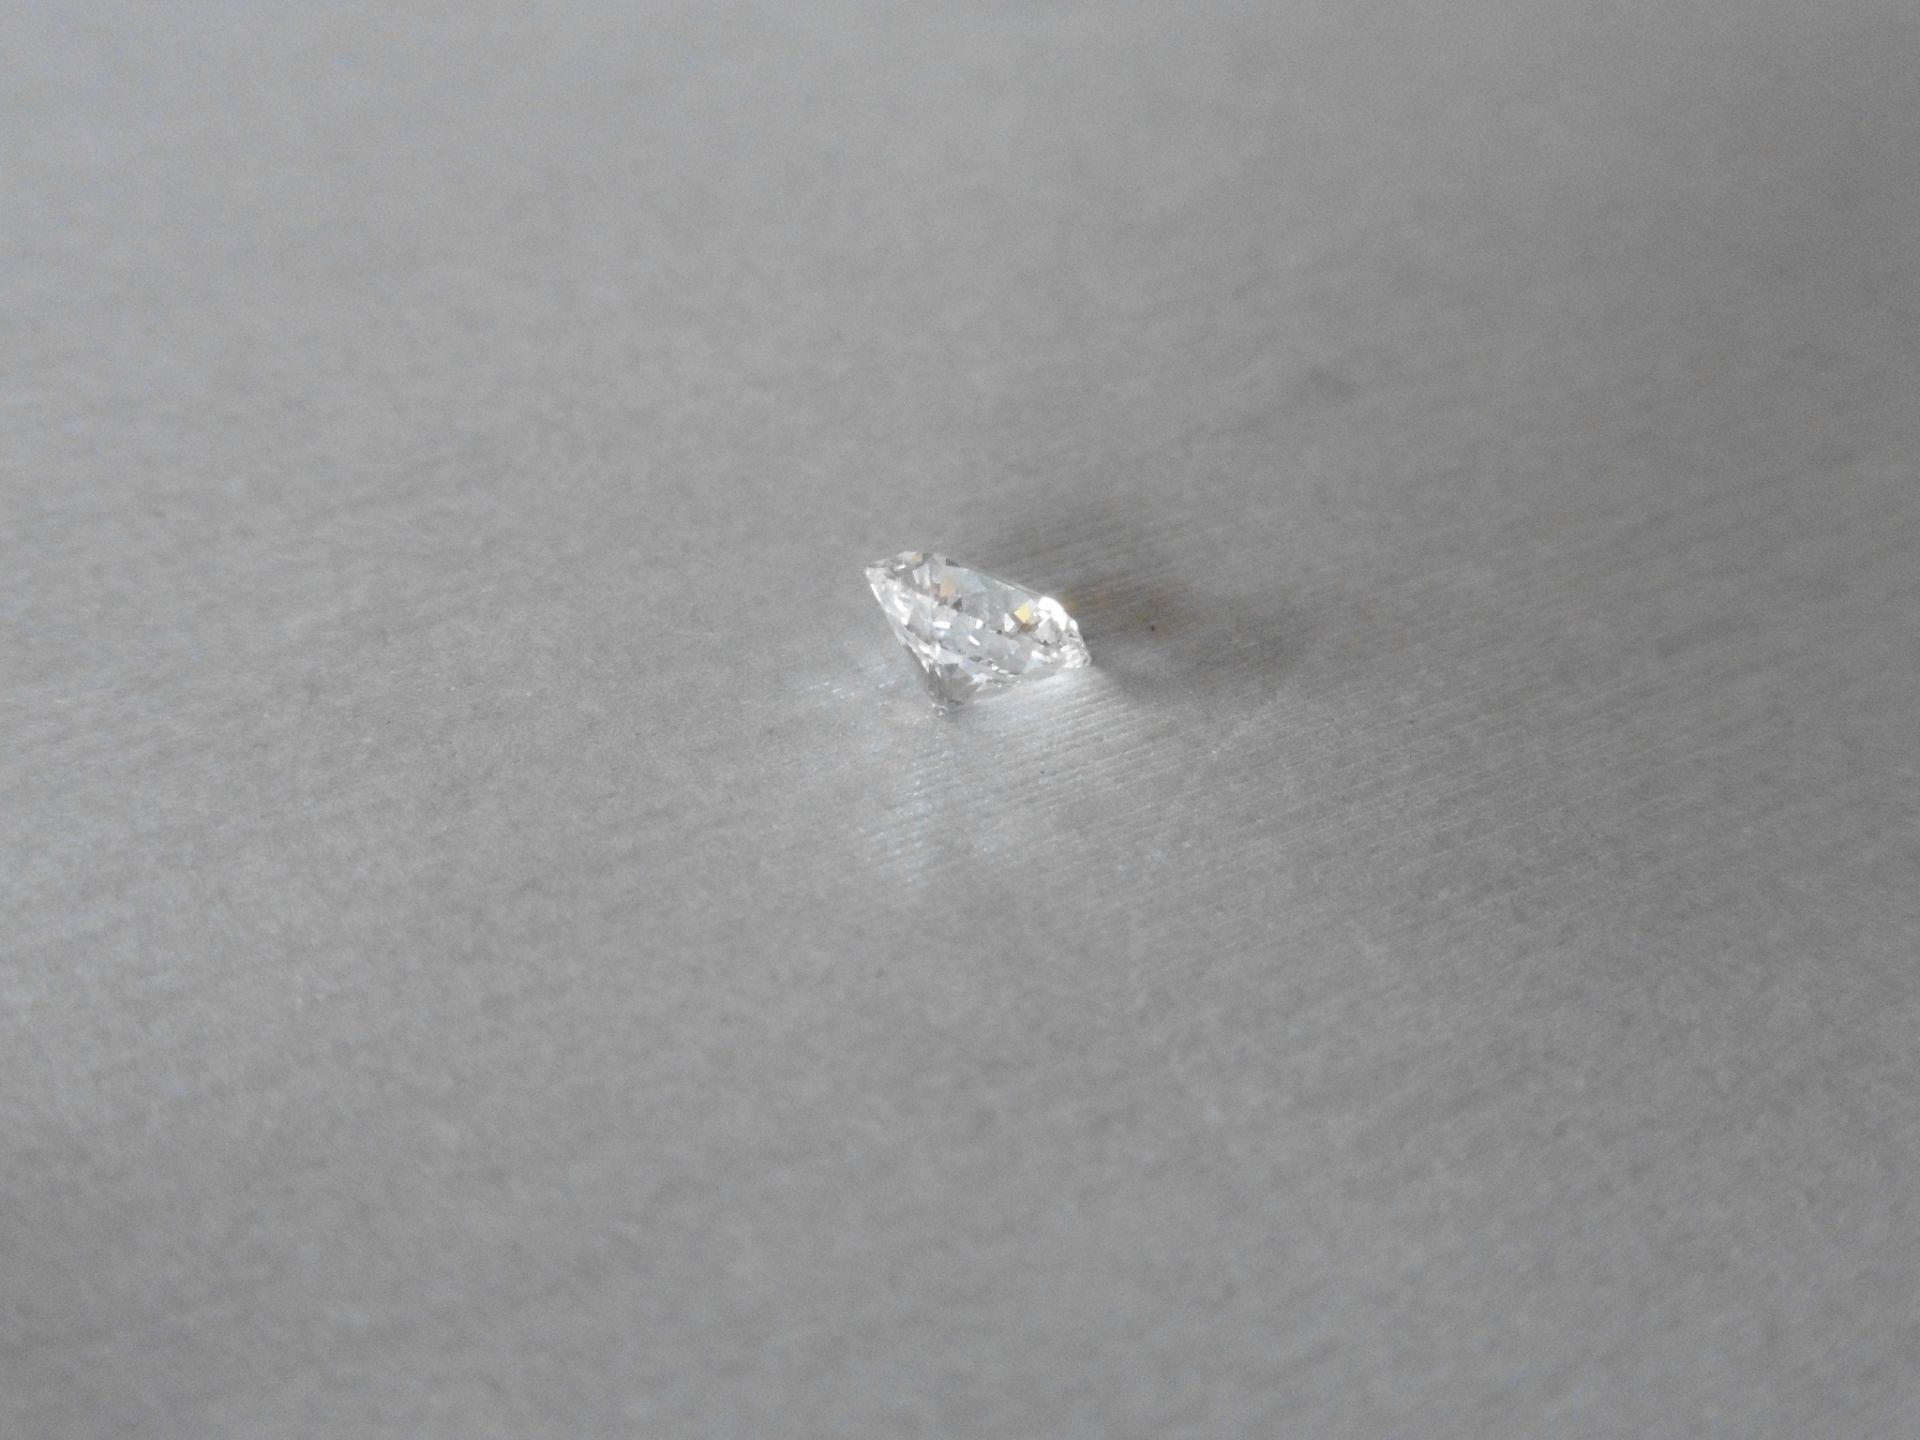 1.06ct single brilliant cut diamond, H colour SI1 clarity. 6.51mm x 6.55mm x 4.05mm.